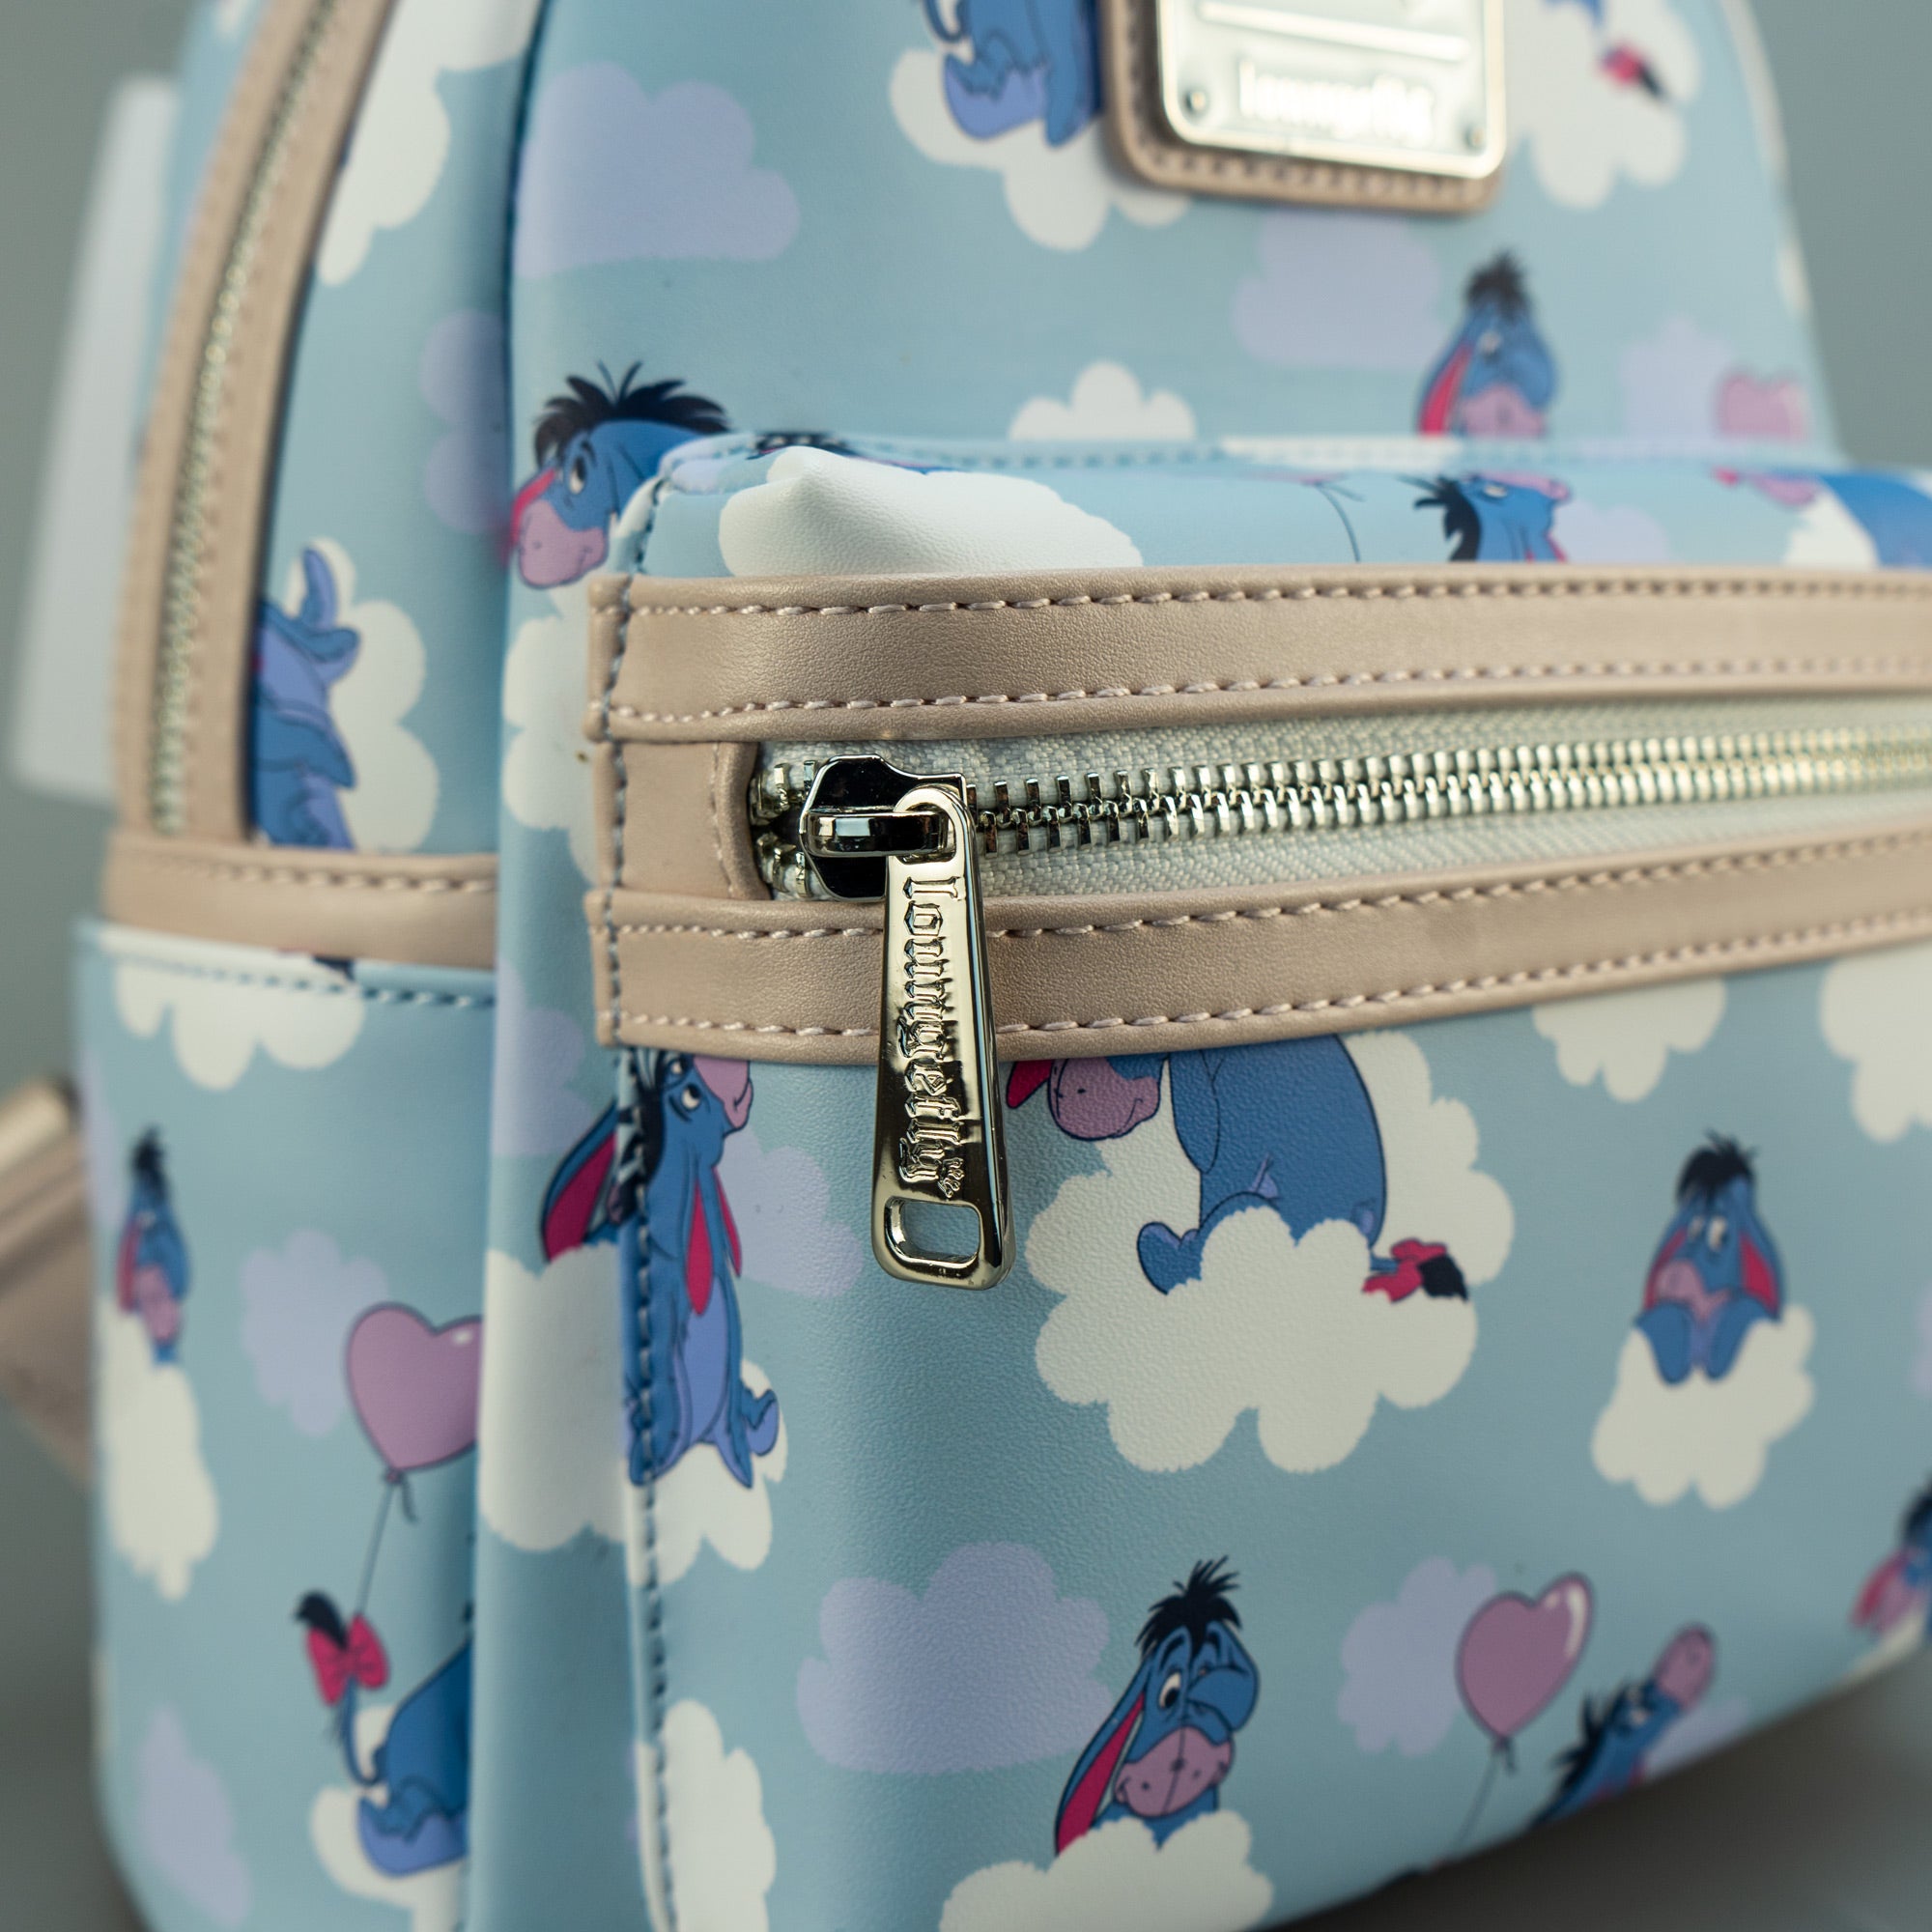 Loungefly x Disney Eeyore Clouds Mini Backpack - GeekCore